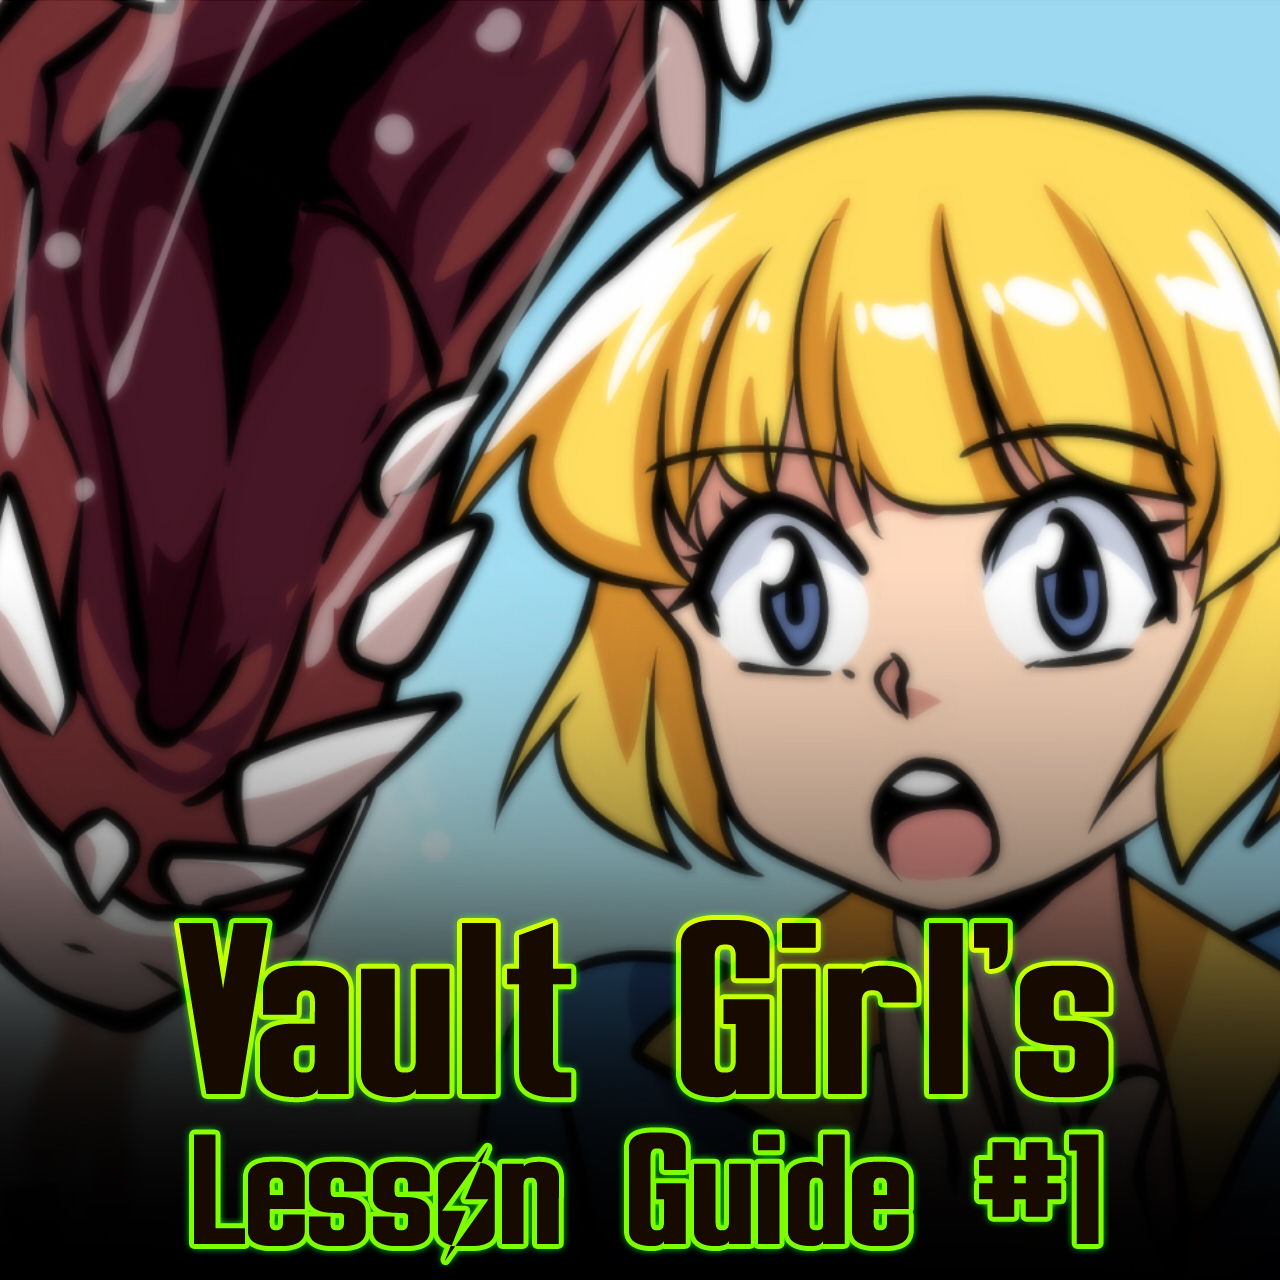 Vault Girl's Lesson Guide #1